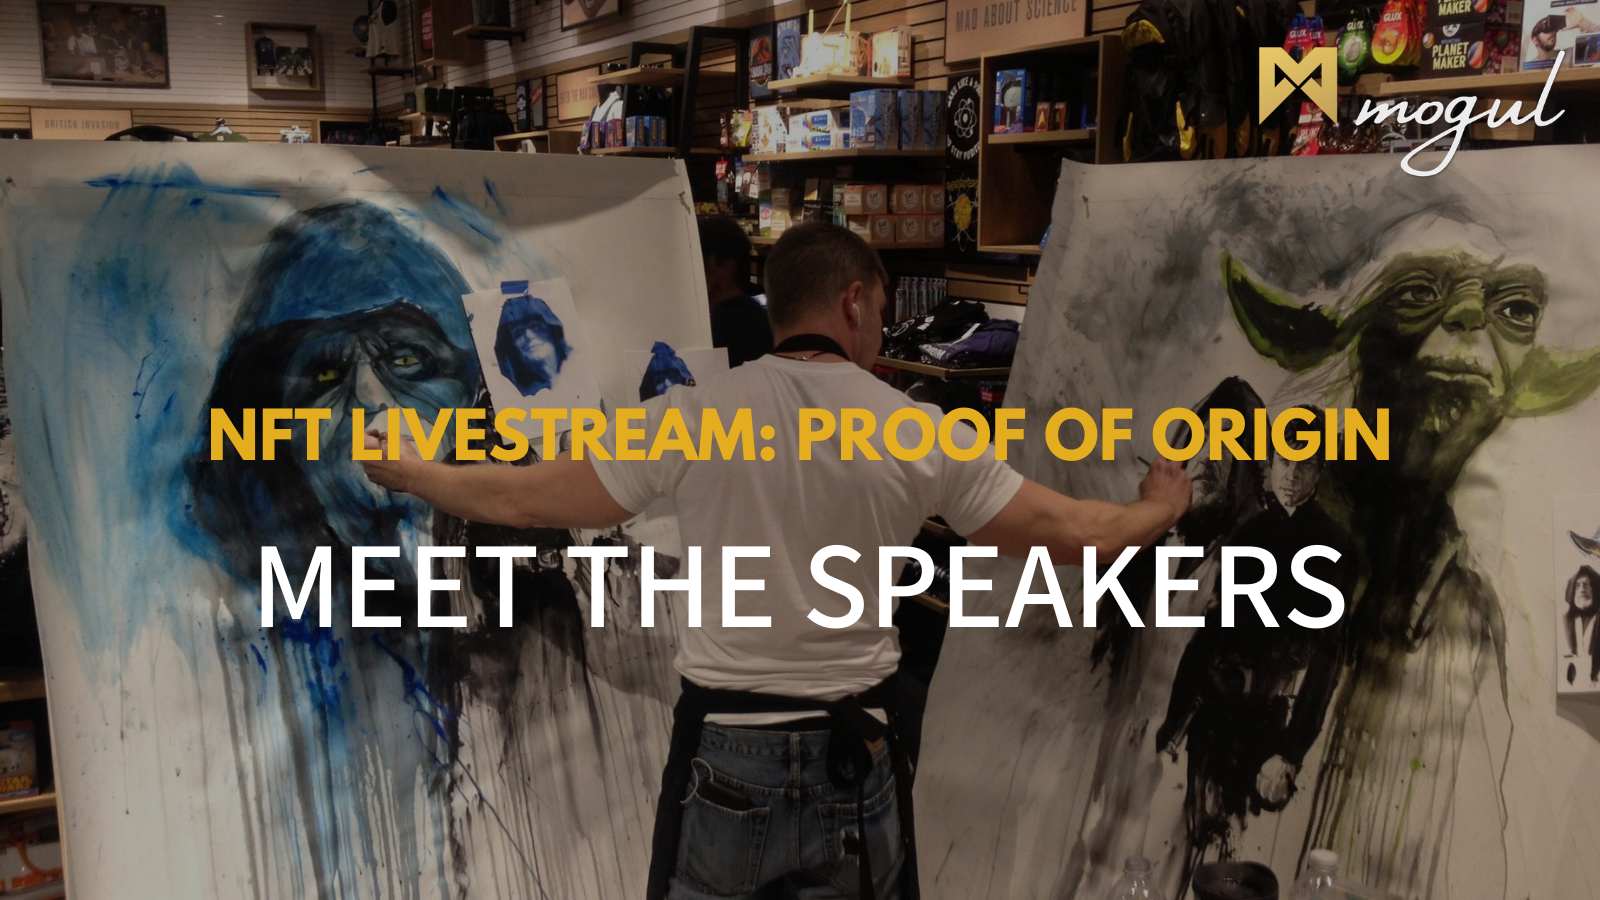 NFT Livestream Proof of Origin - The Speakers! Rob-Prior-Twitter